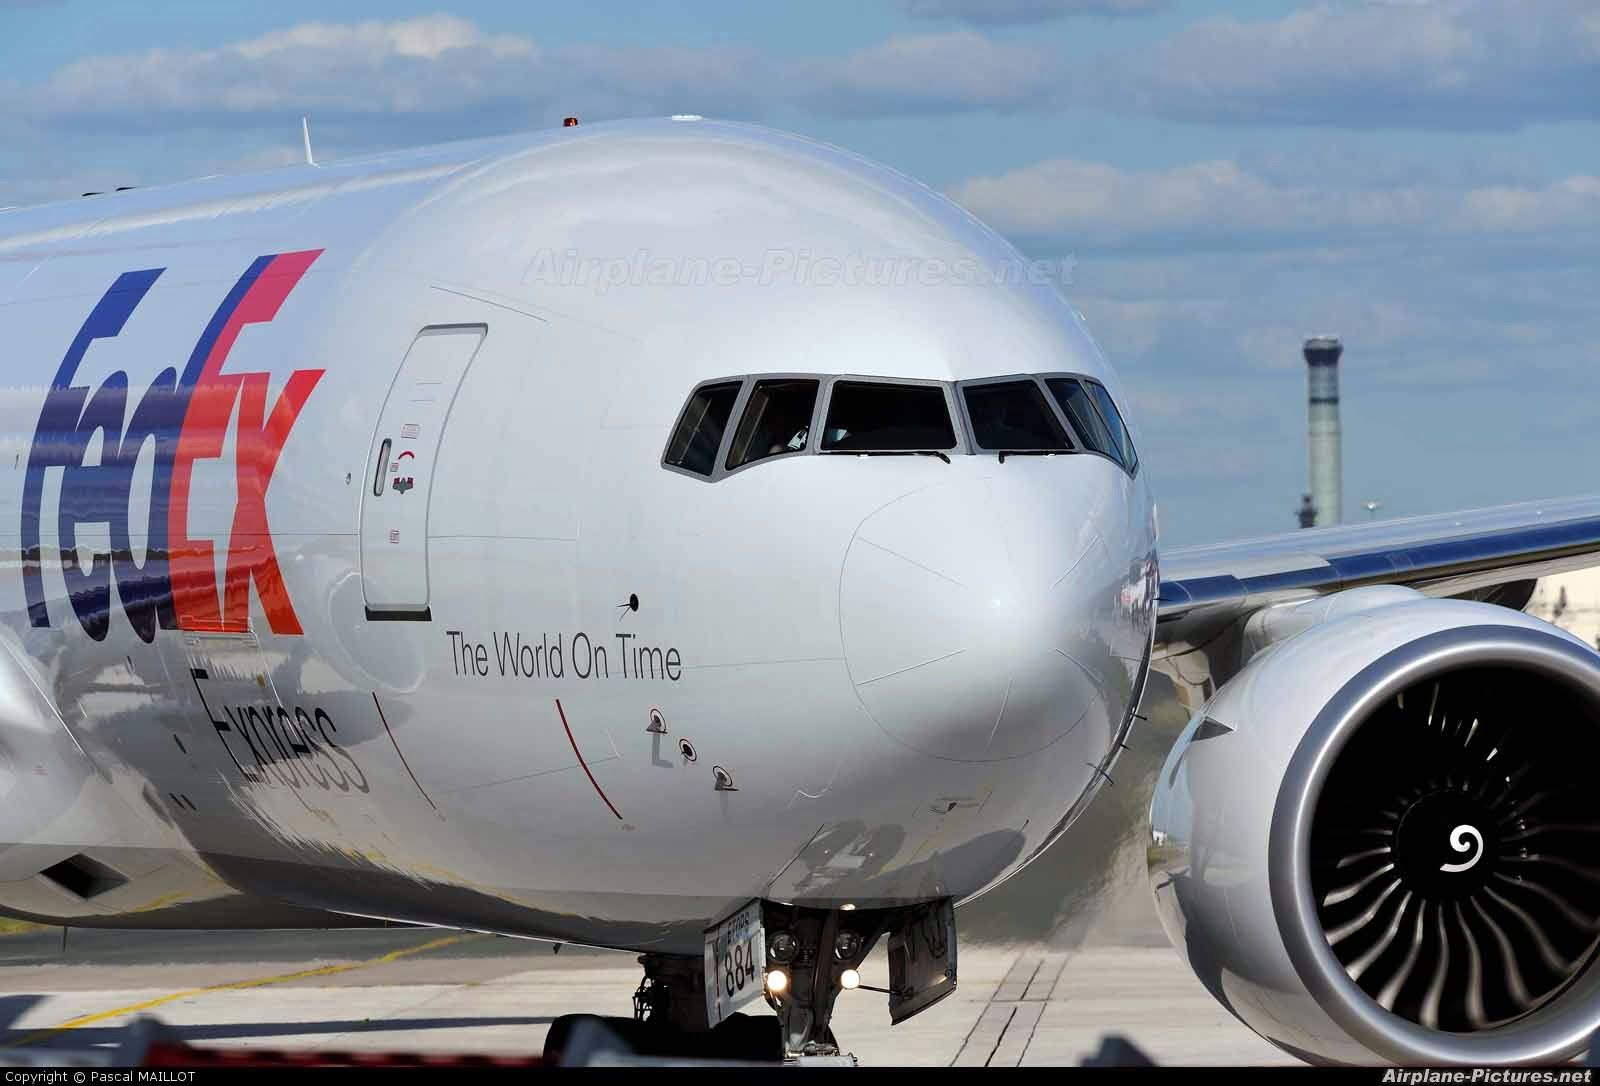 fedex wallpaper,airline,aviation,airliner,vehicle,airplane